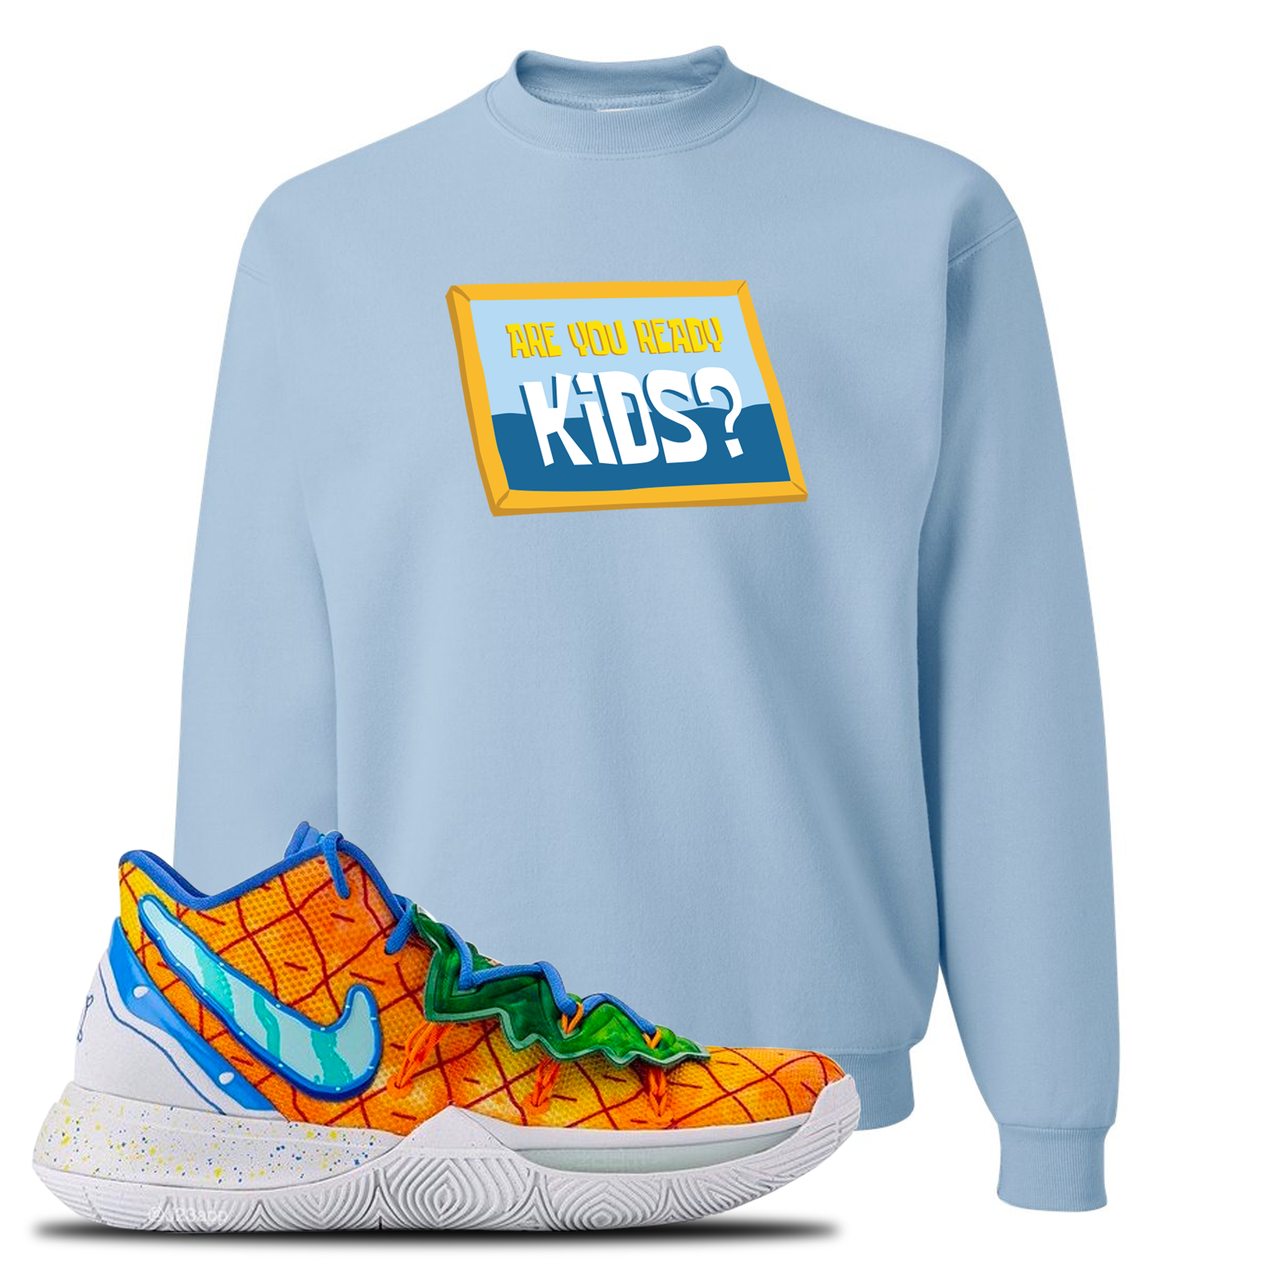 Kyrie 5 Pineapple House Are You Ready Kids? Sky Blue Sneaker Hook Up Crewneck Sweatshirt